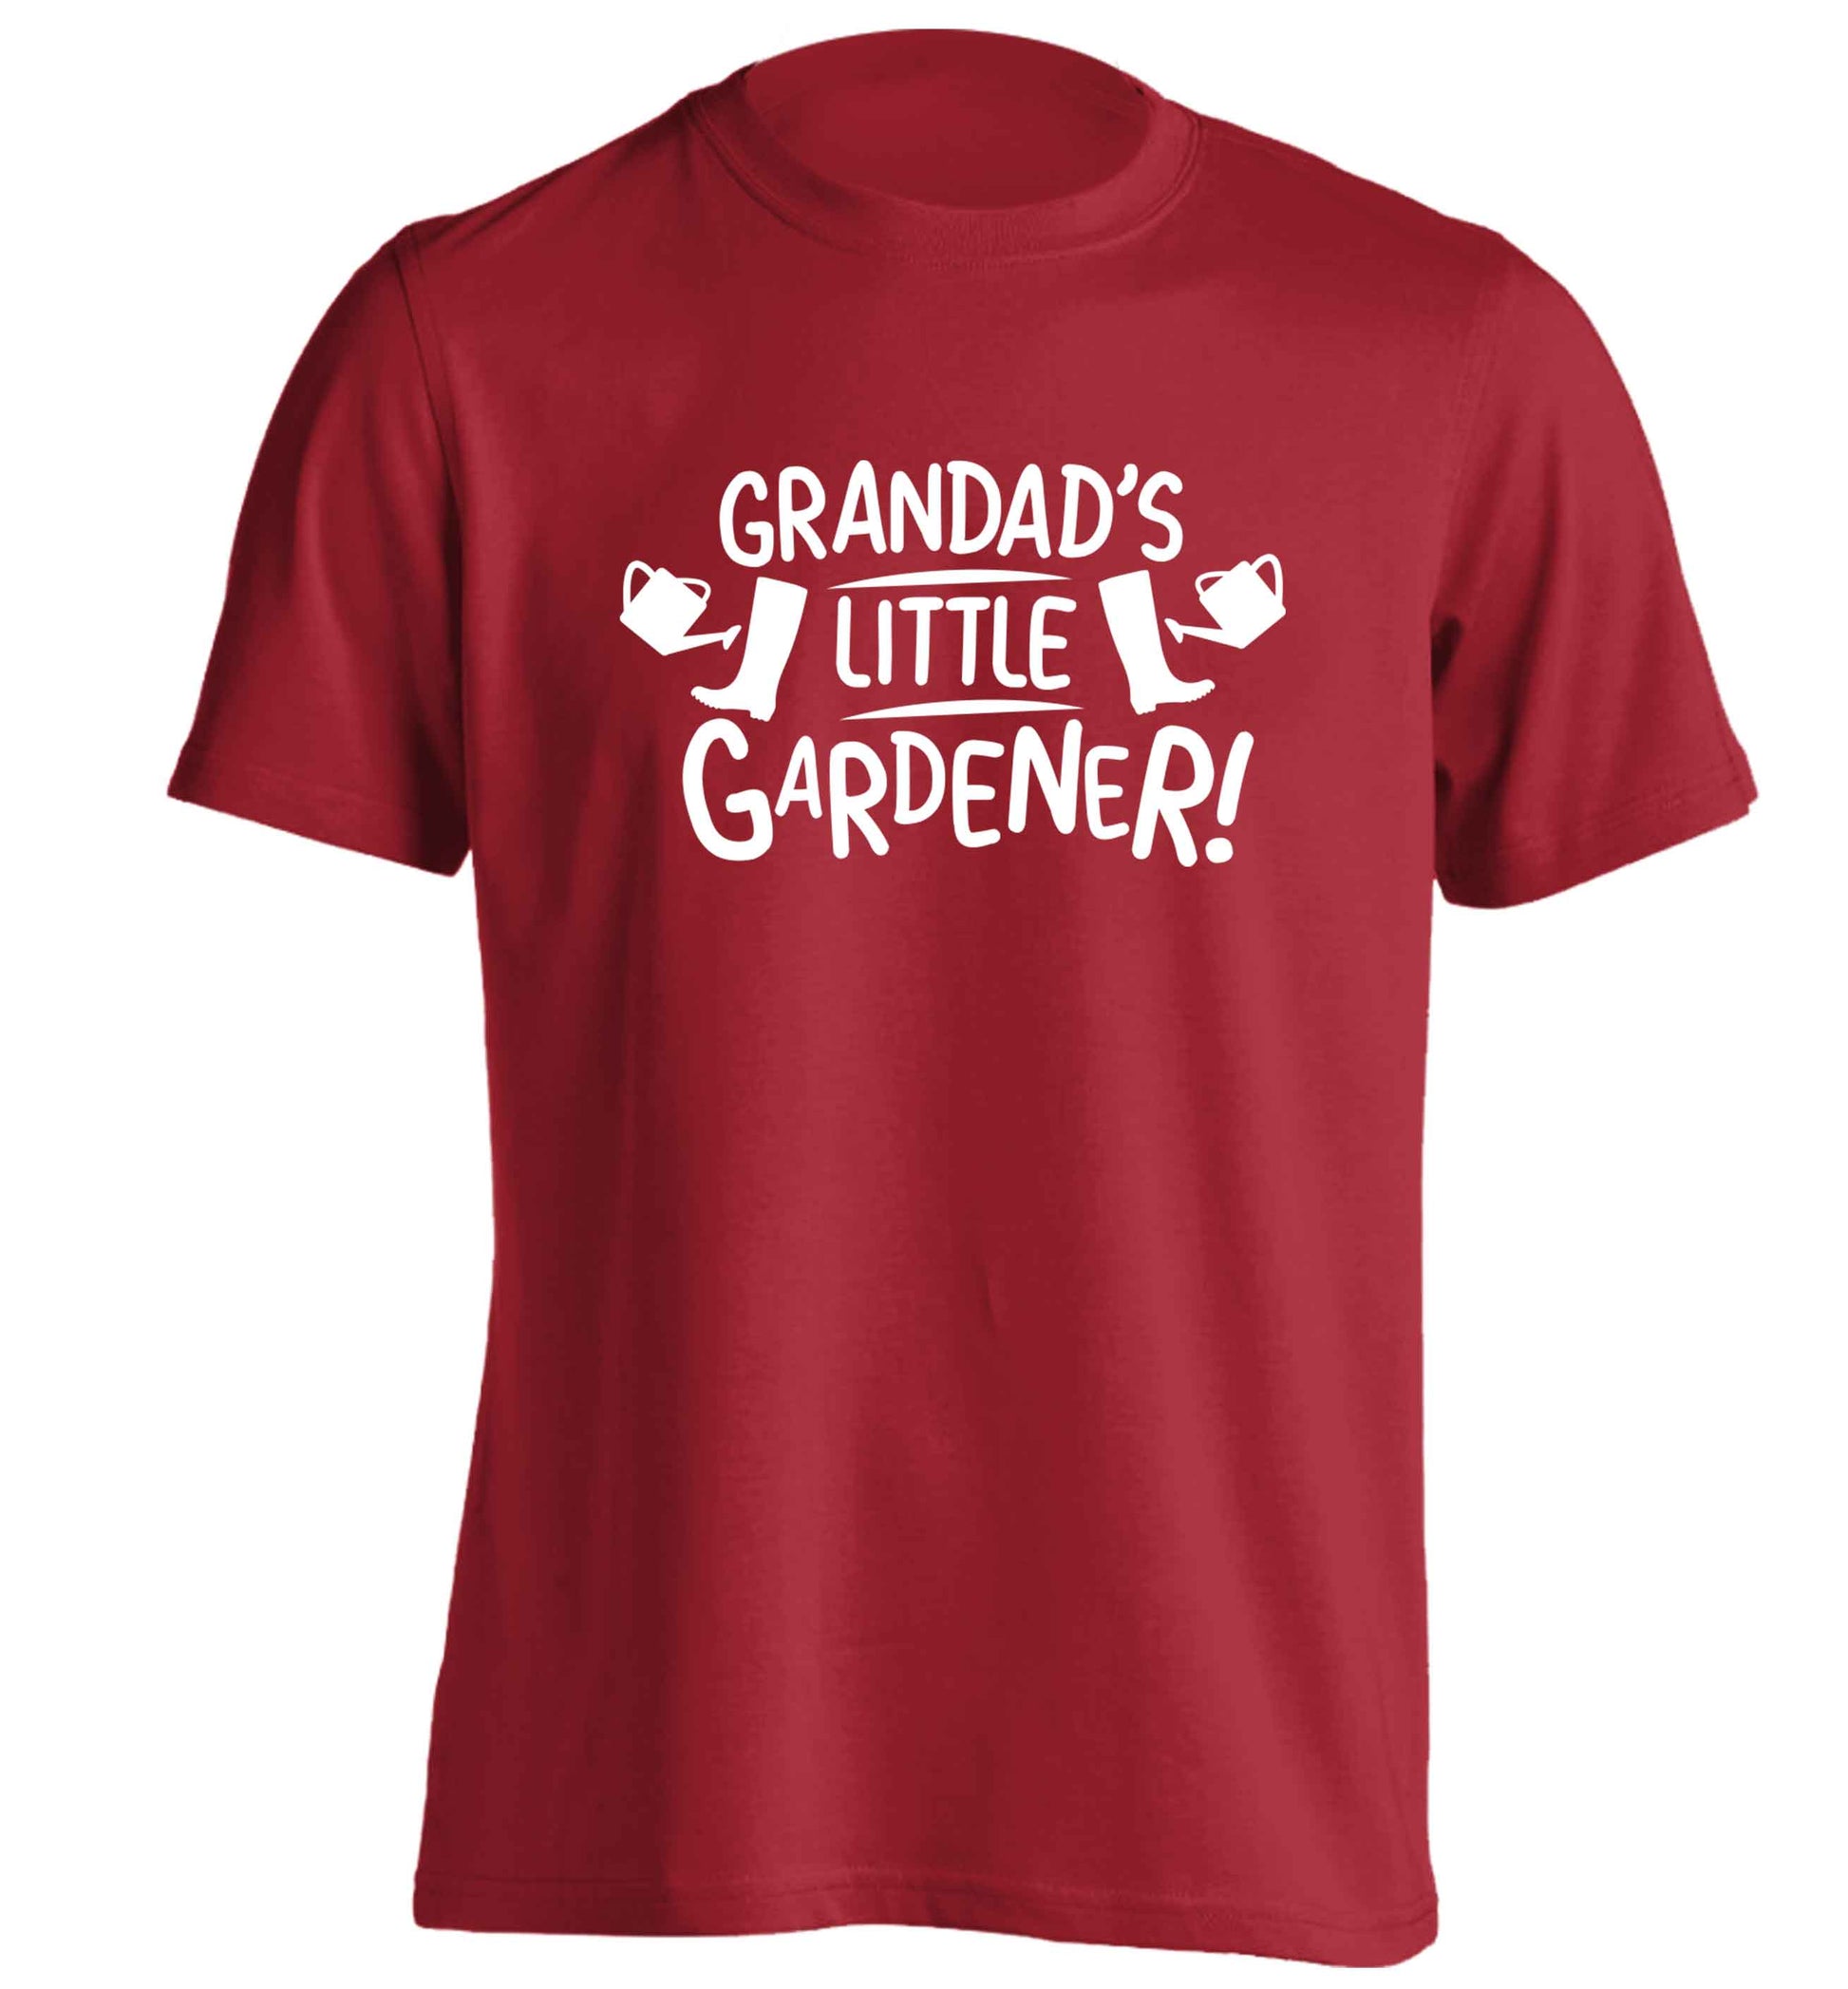 Grandad's little gardener adults unisex red Tshirt 2XL